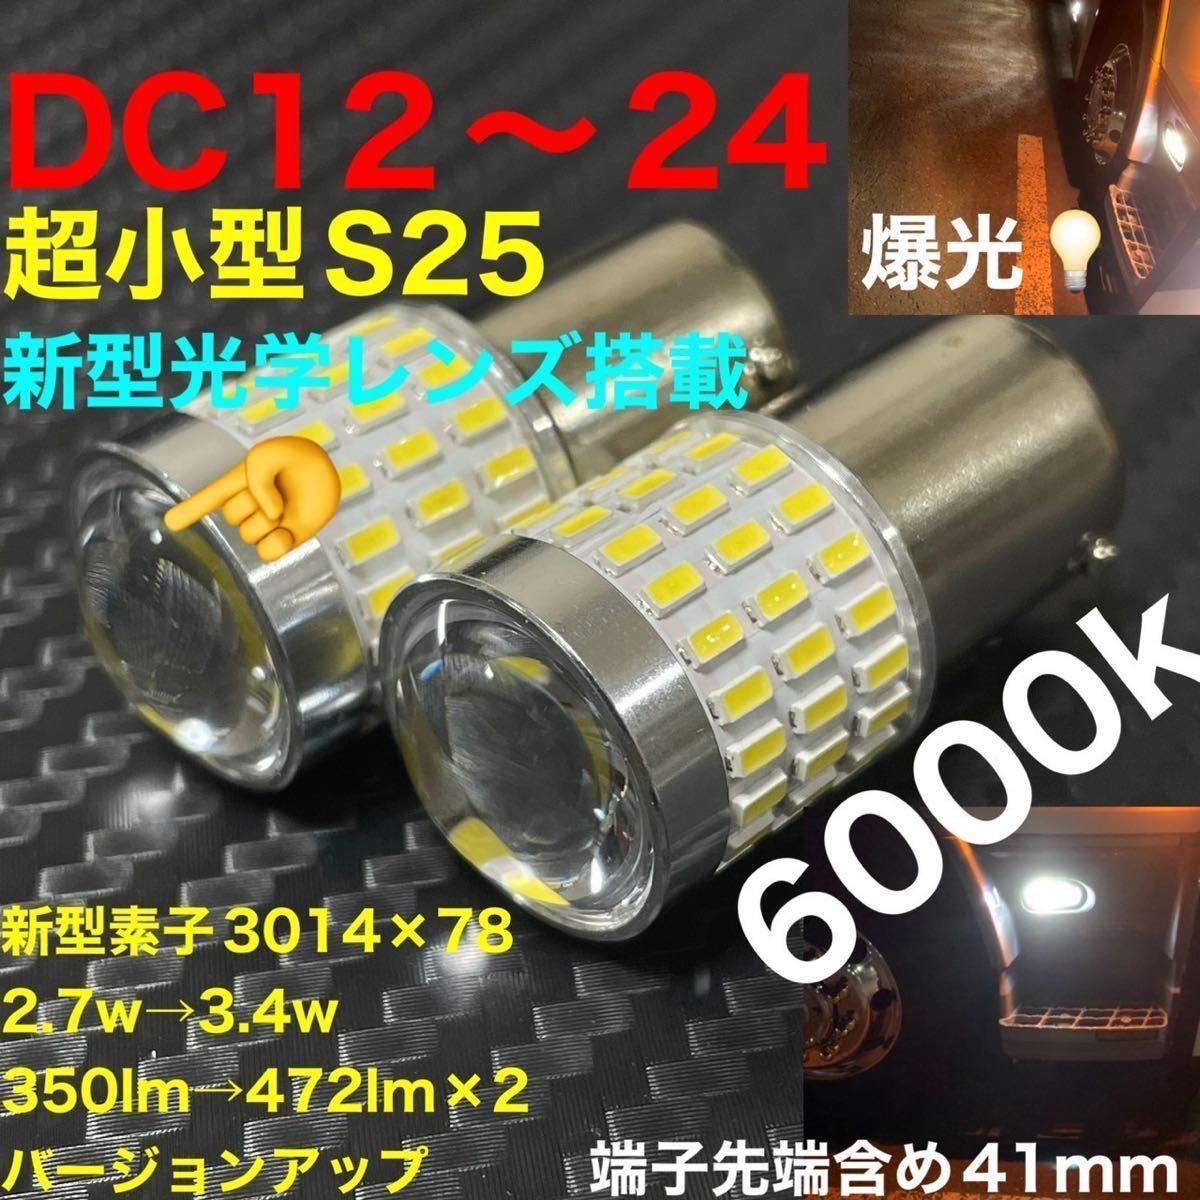 LED ba15s 1156 S25 シングル バックランプ ナンバー灯 リバース 12V 24V 兼用 無極性新型素子3014×78 3.4w 472lm×2 バージョンアップの画像1